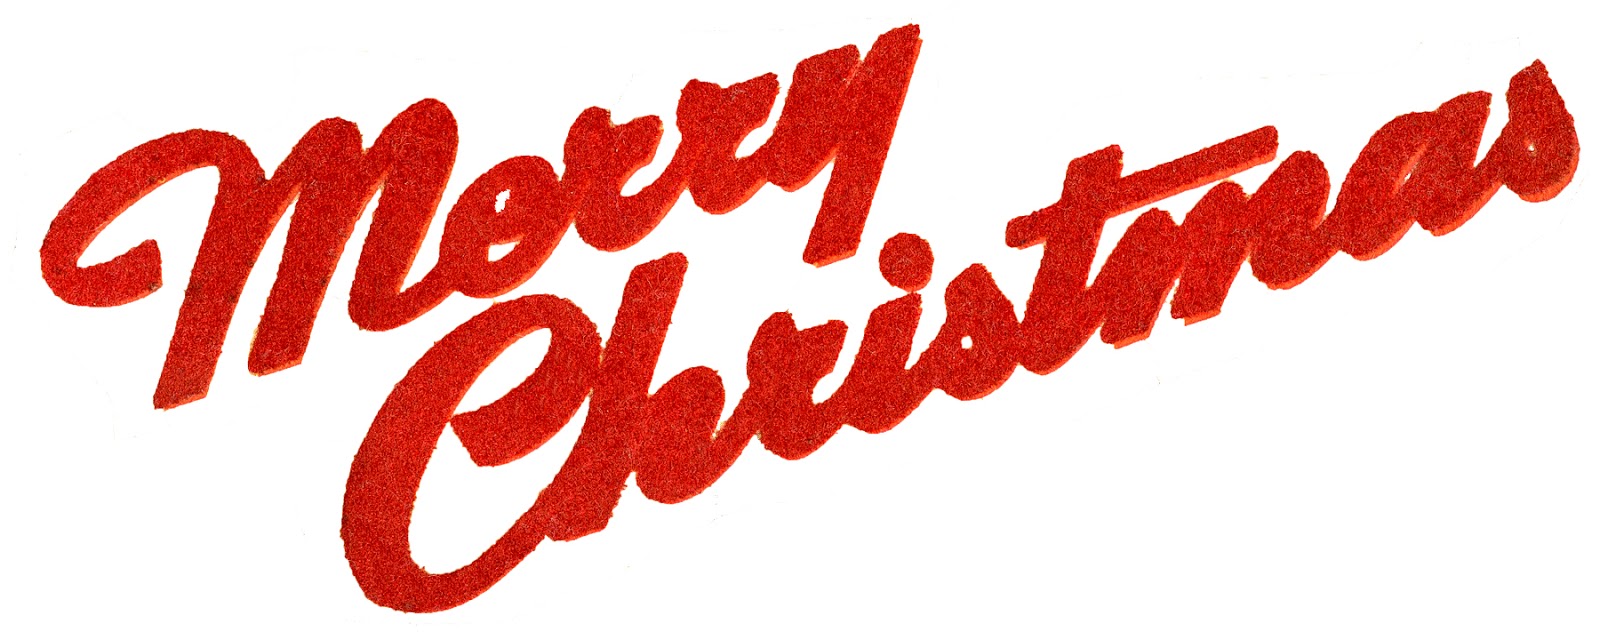 Retro Typography   Flocked Merry Christmas   The Graphics Fairy